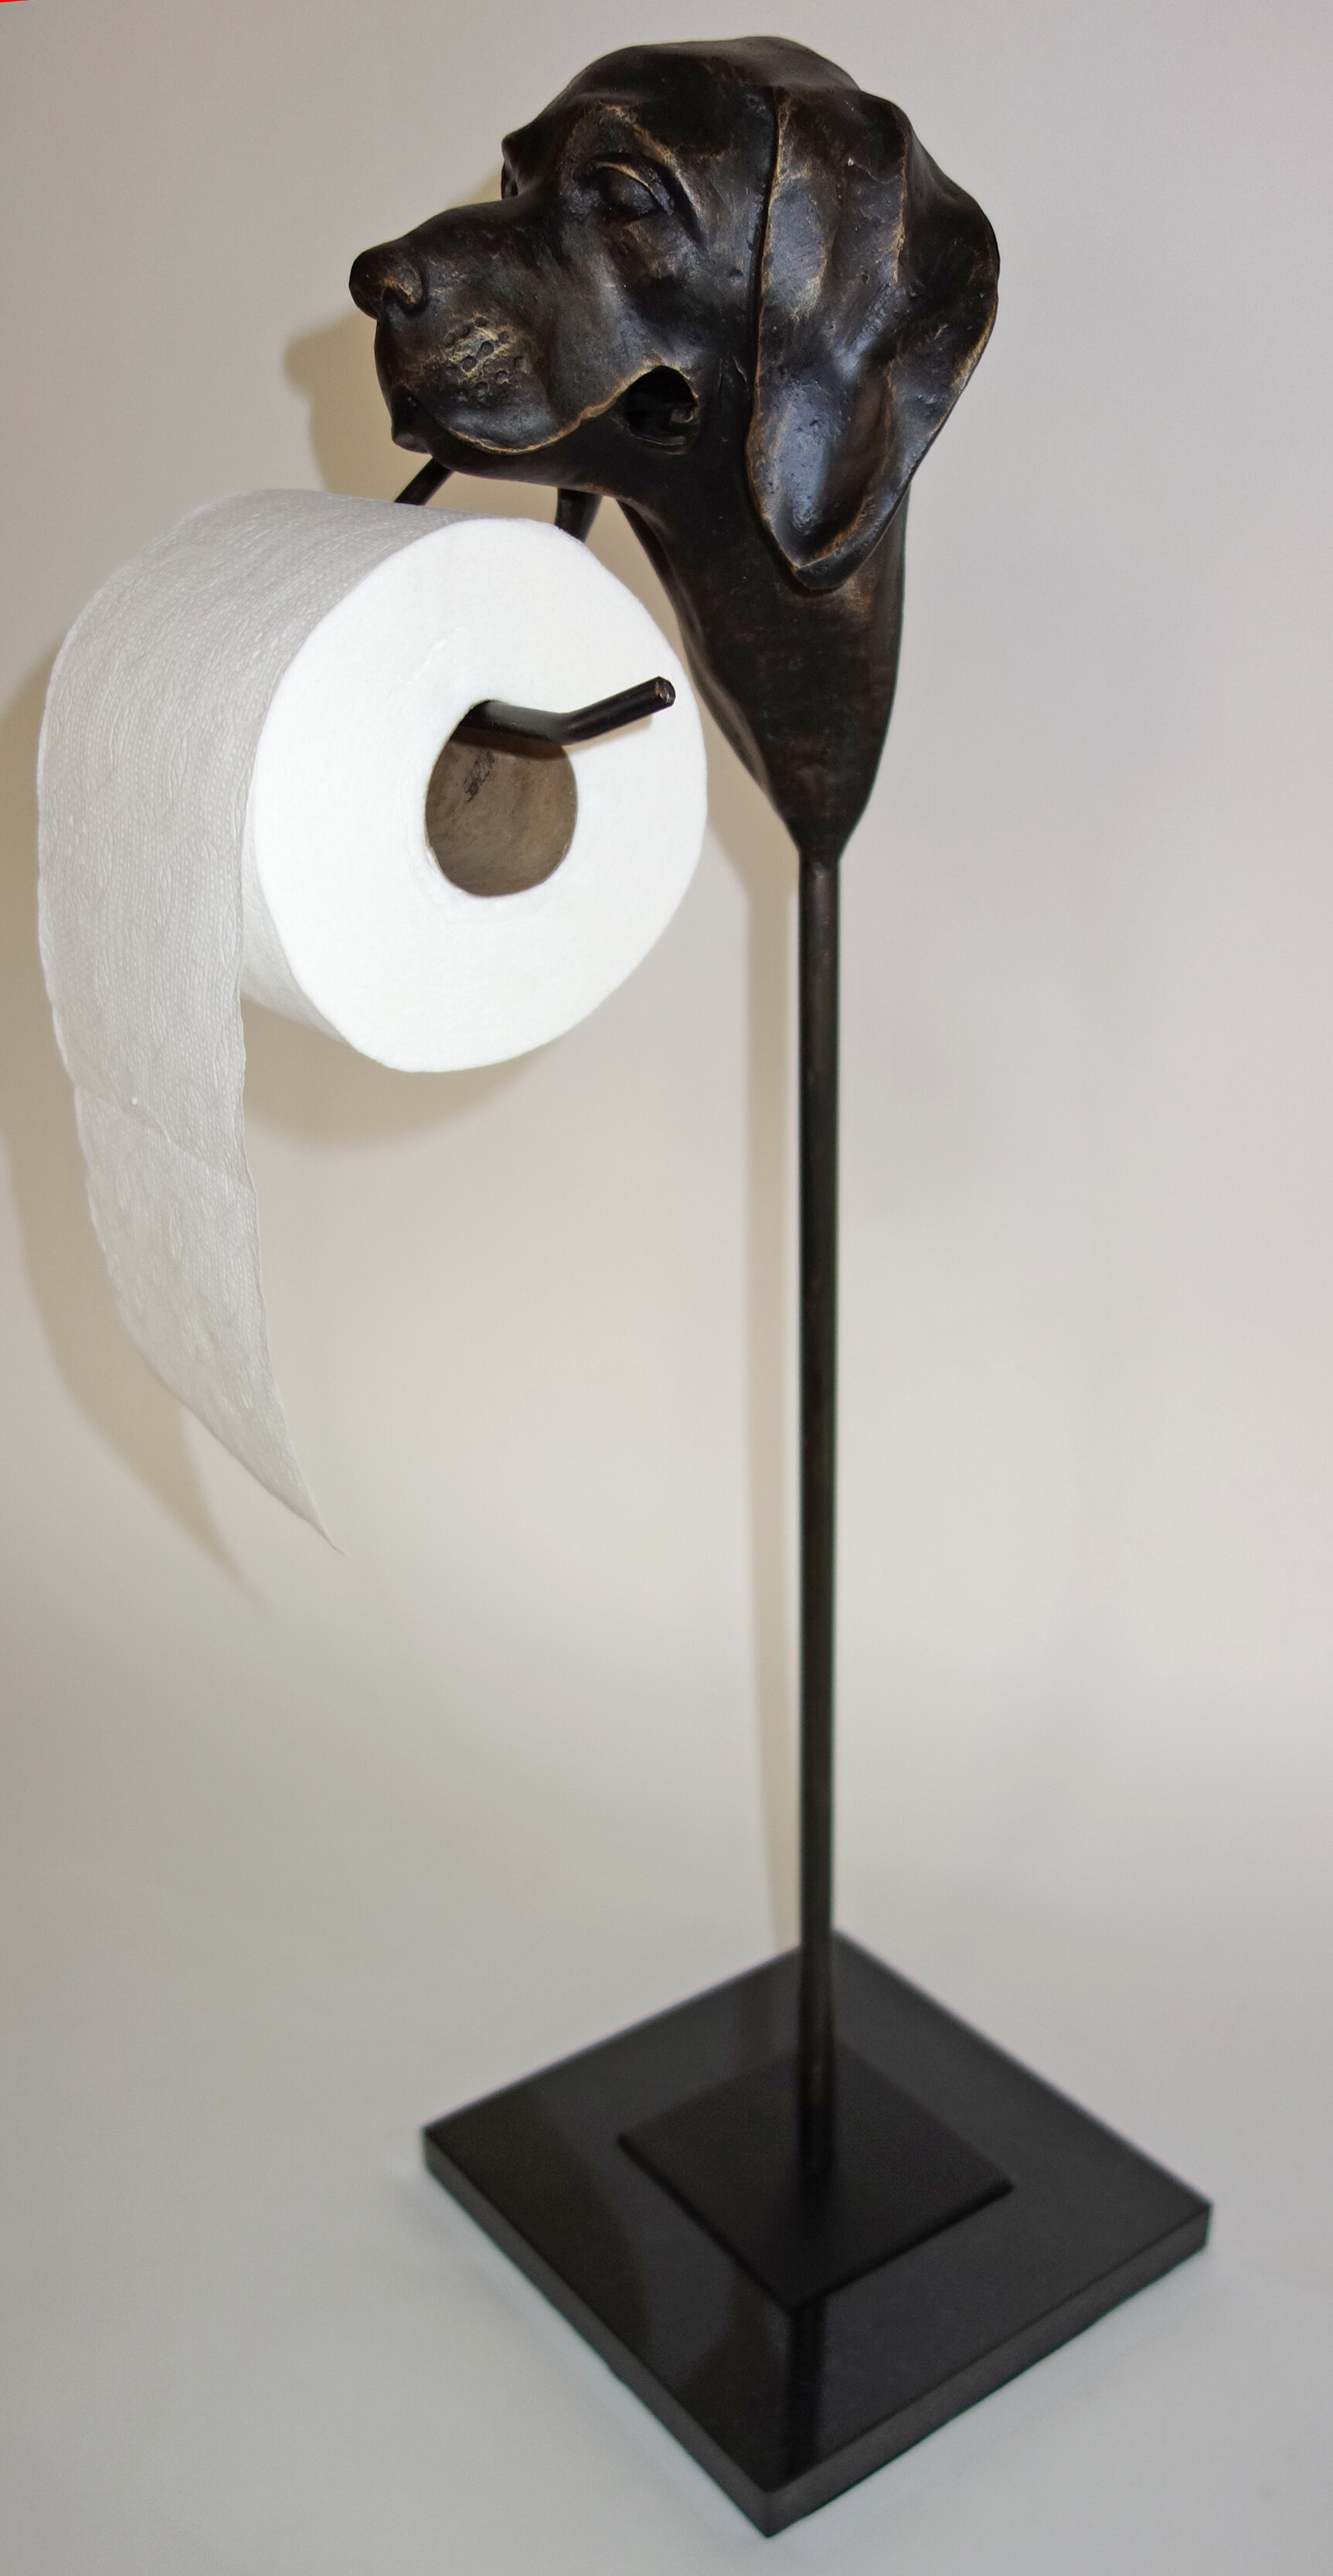 DessauHome Freestanding Toilet Paper Holder & Reviews